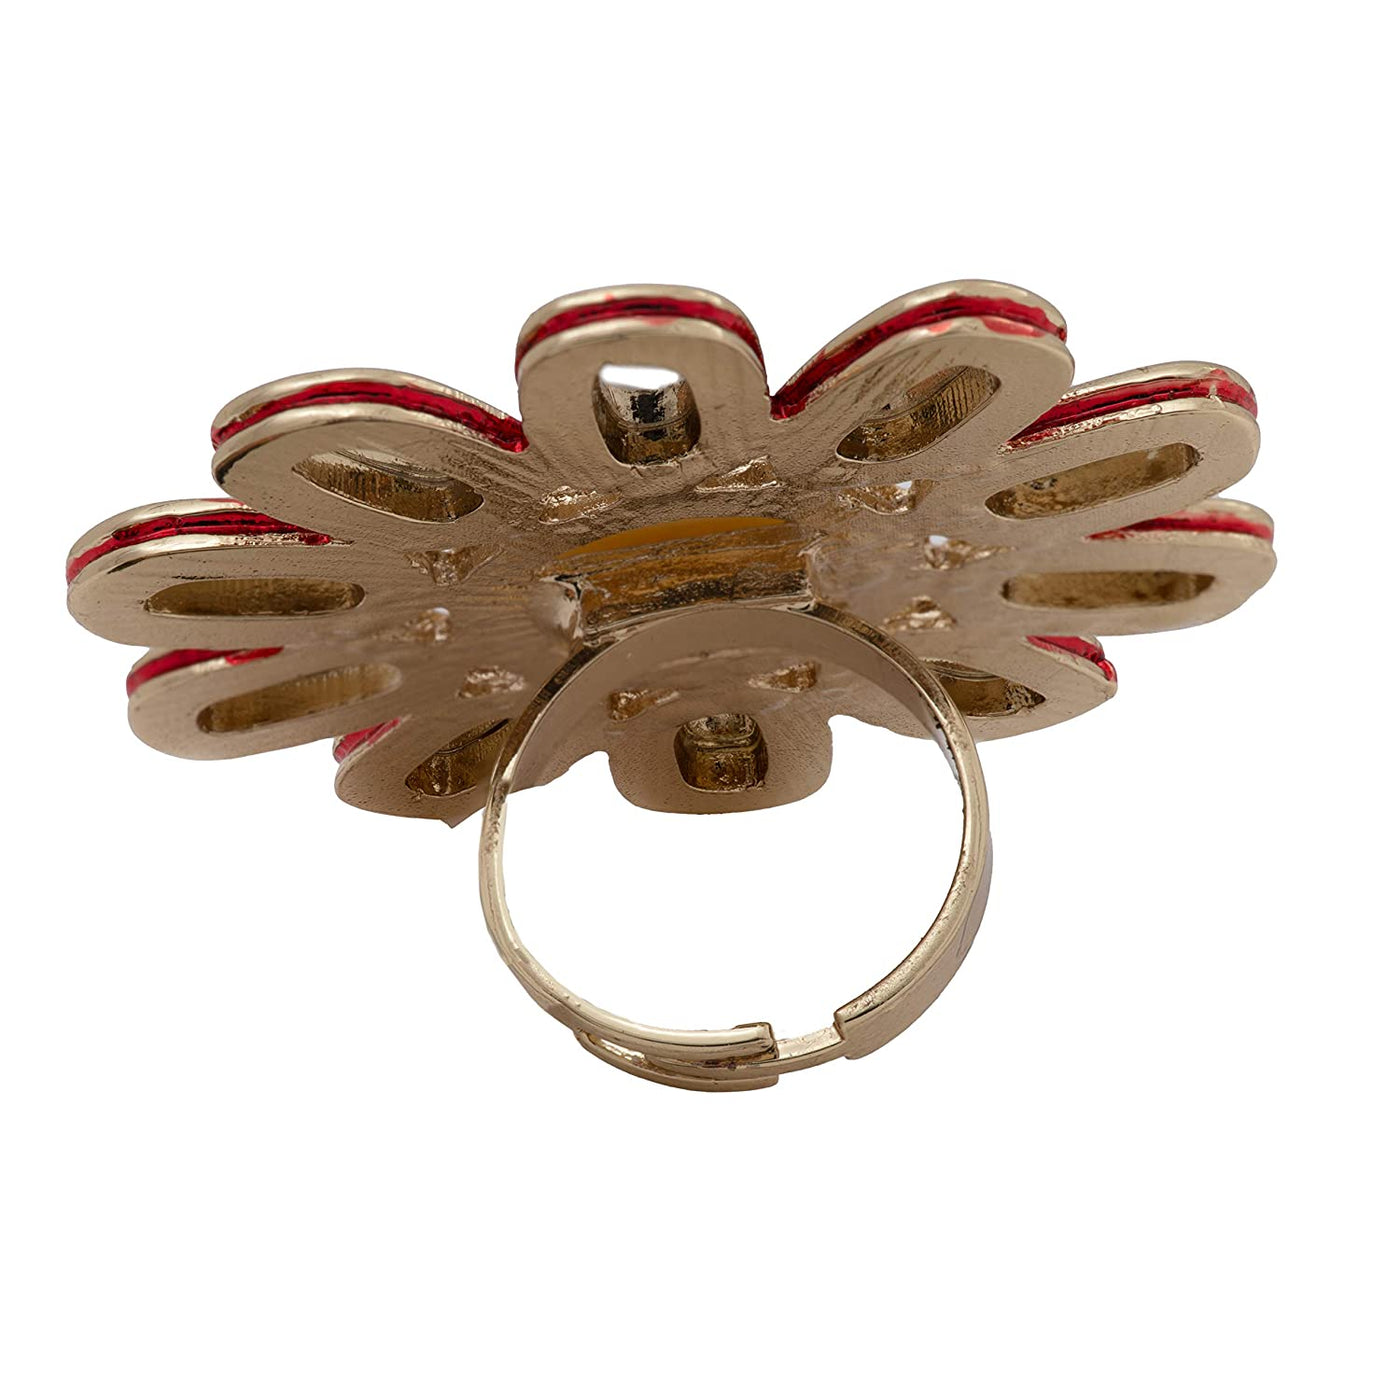 Designer polki Kundan adjustable ring with cream pearl for women